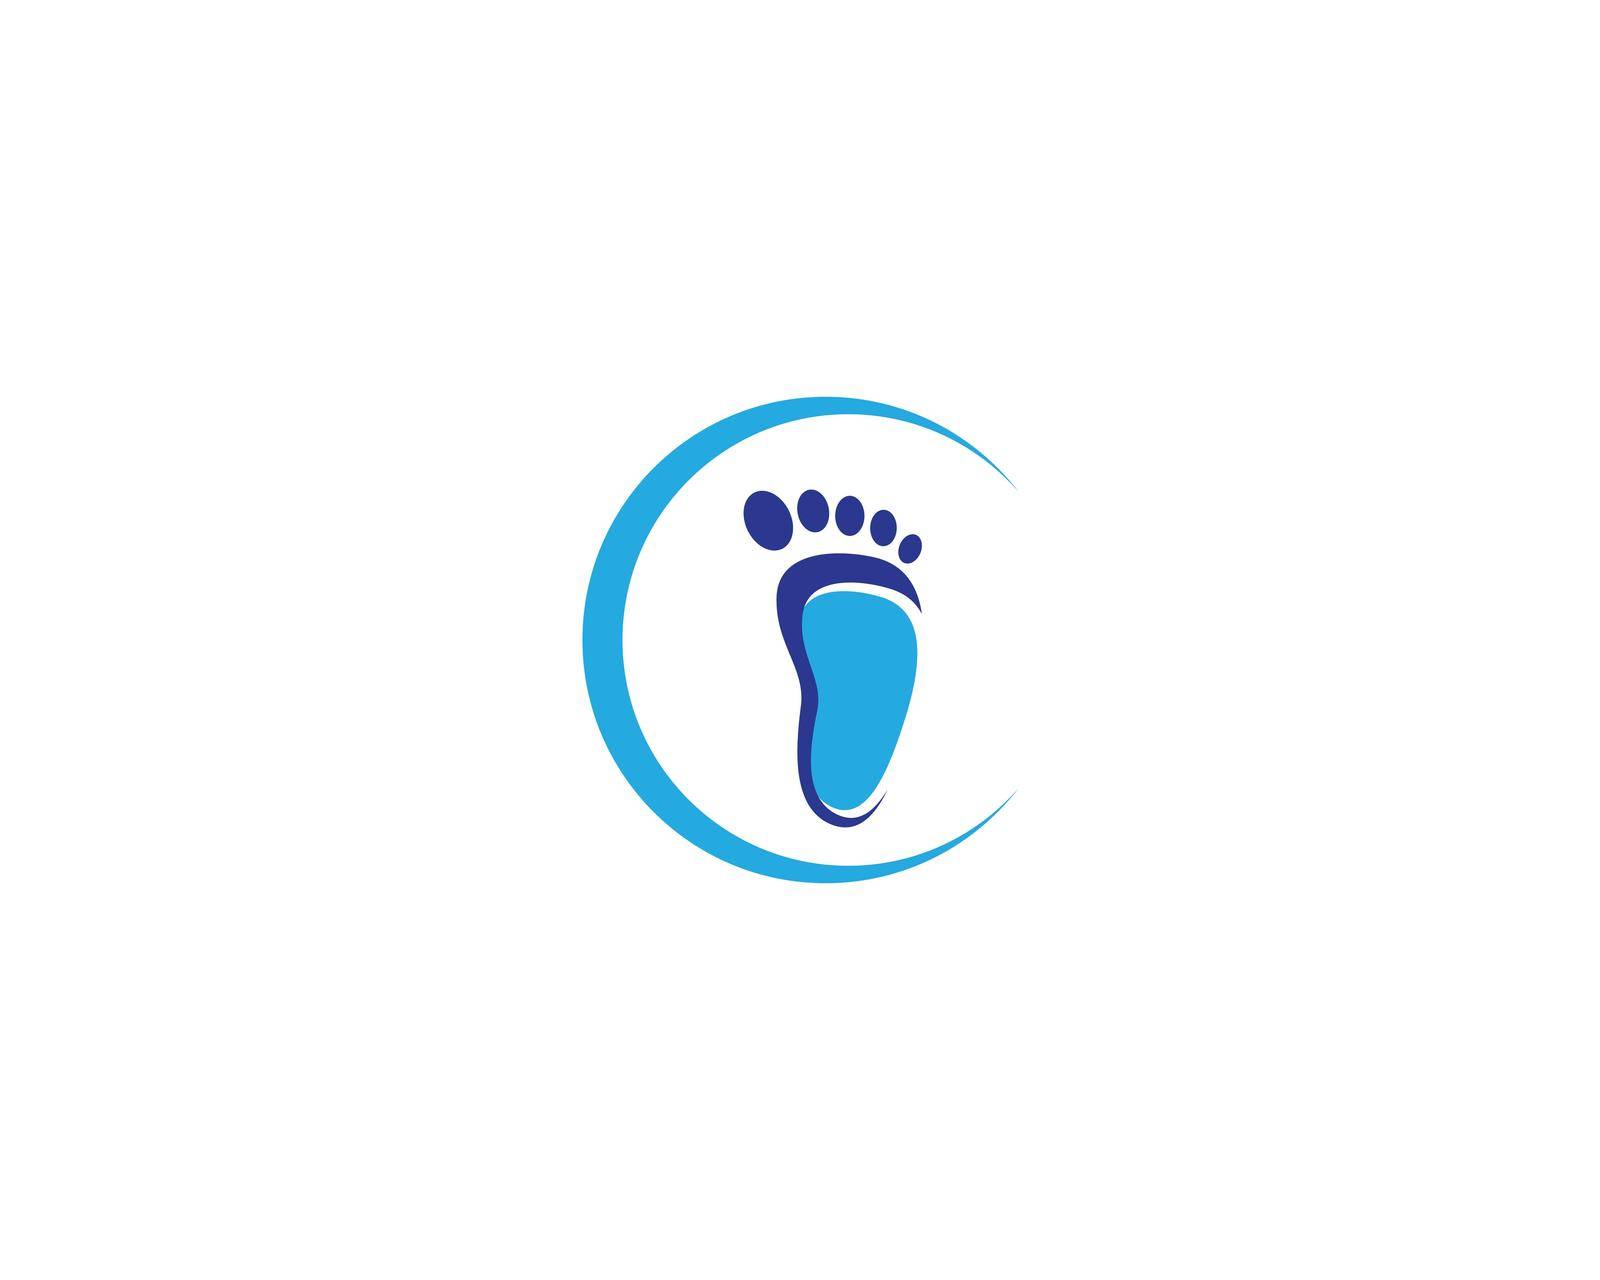 Foot therapist logo vector by Attades19